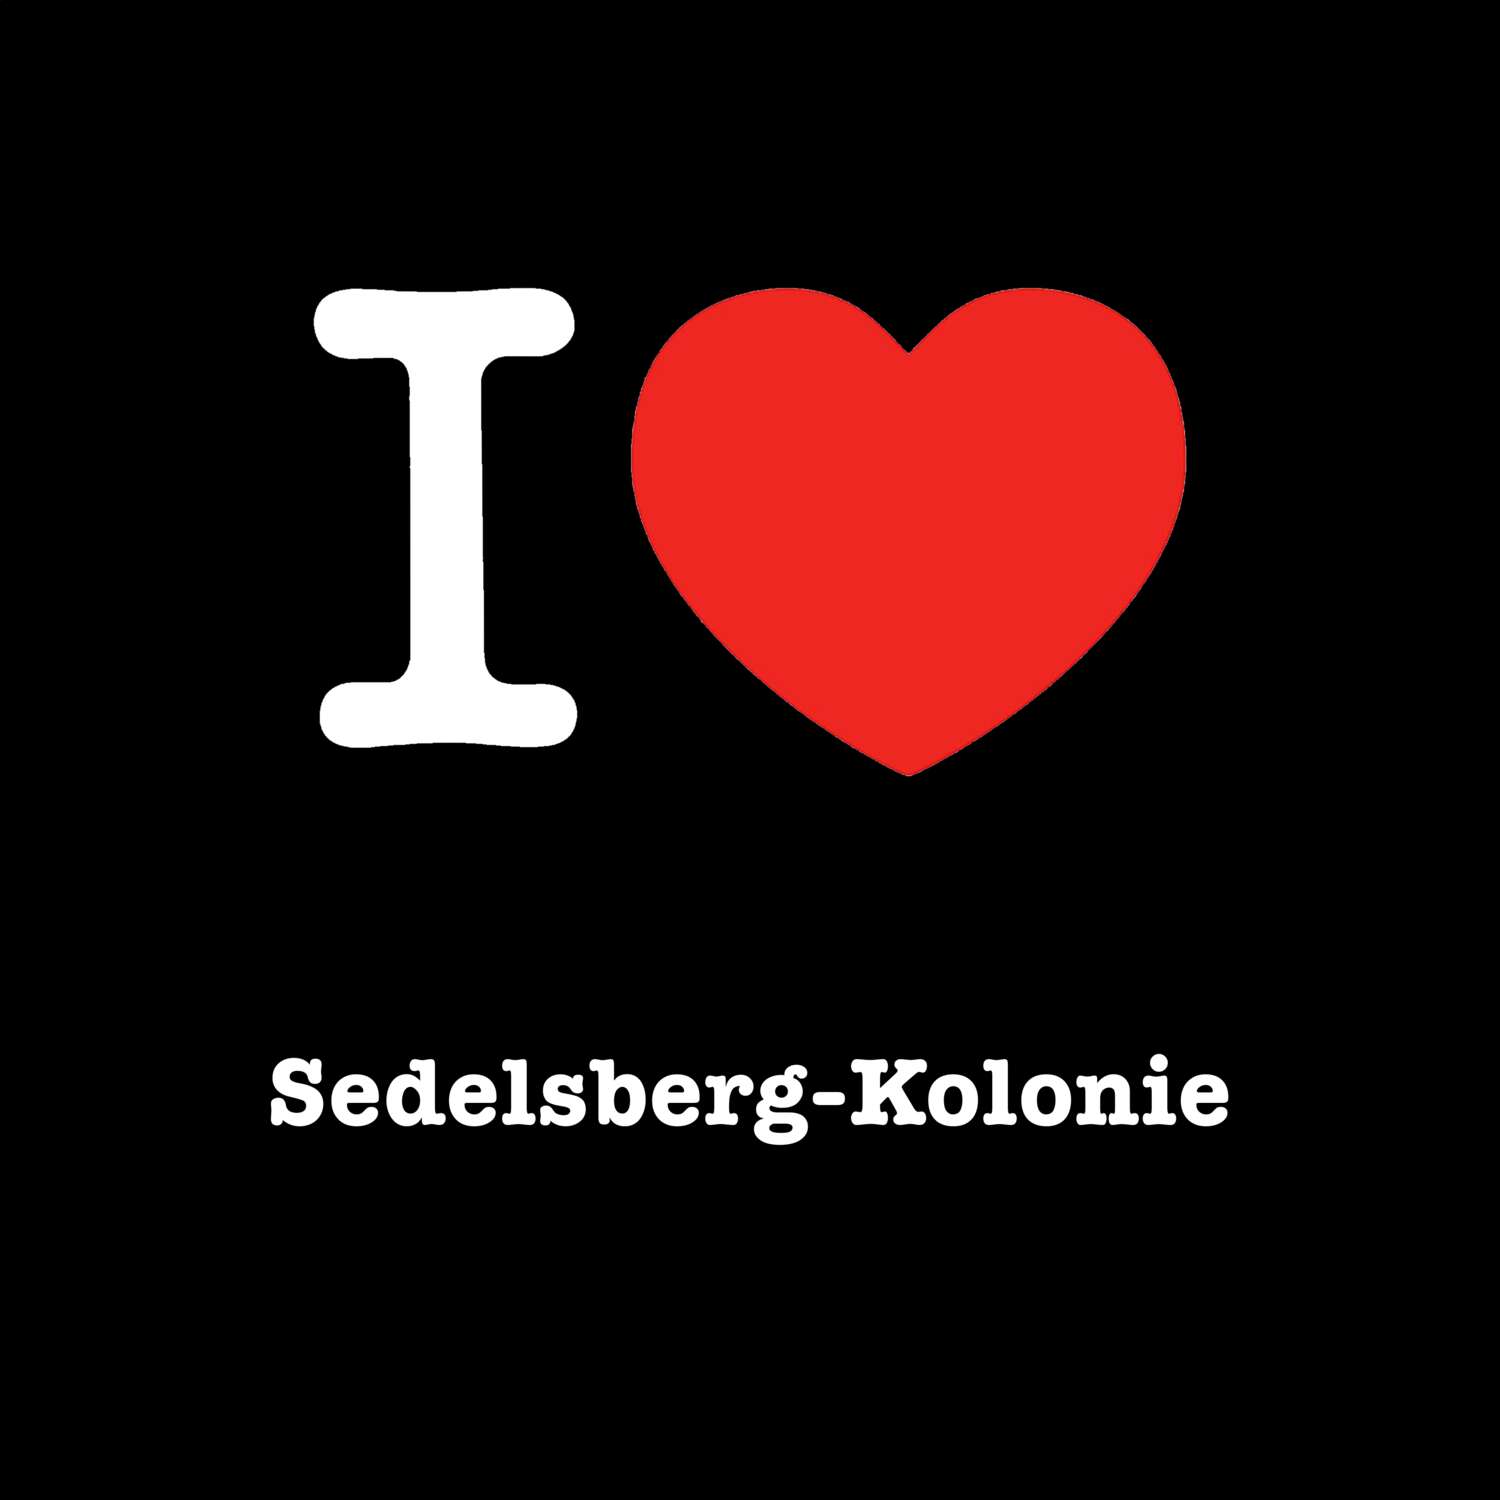 Sedelsberg-Kolonie T-Shirt »I love«